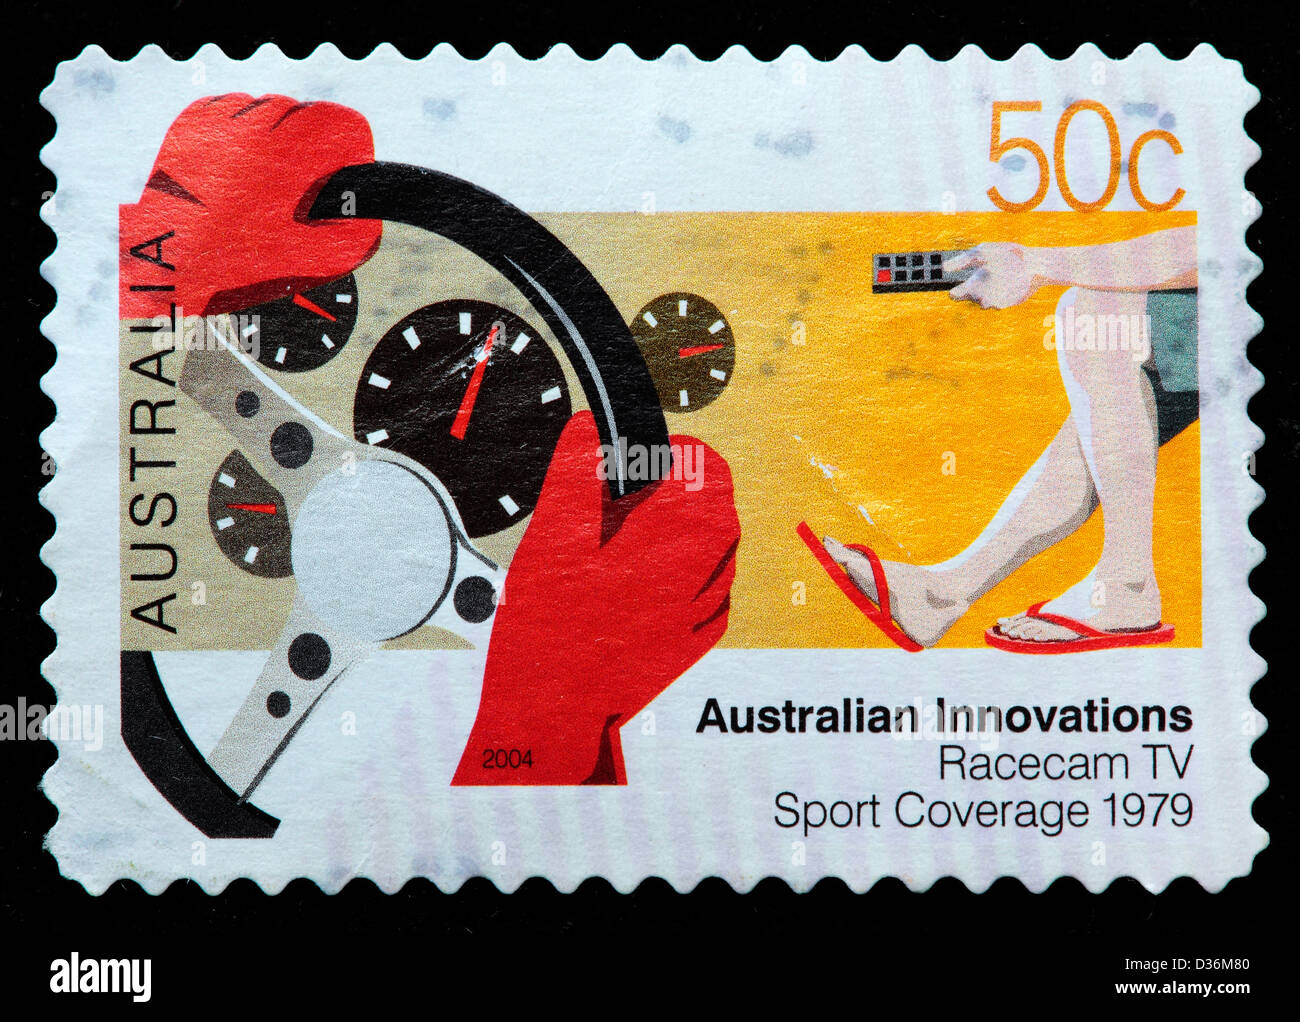 Racecam television sports coverage (1979), Australian innovations, postage stamp, Australia, 2004 Stock Photo